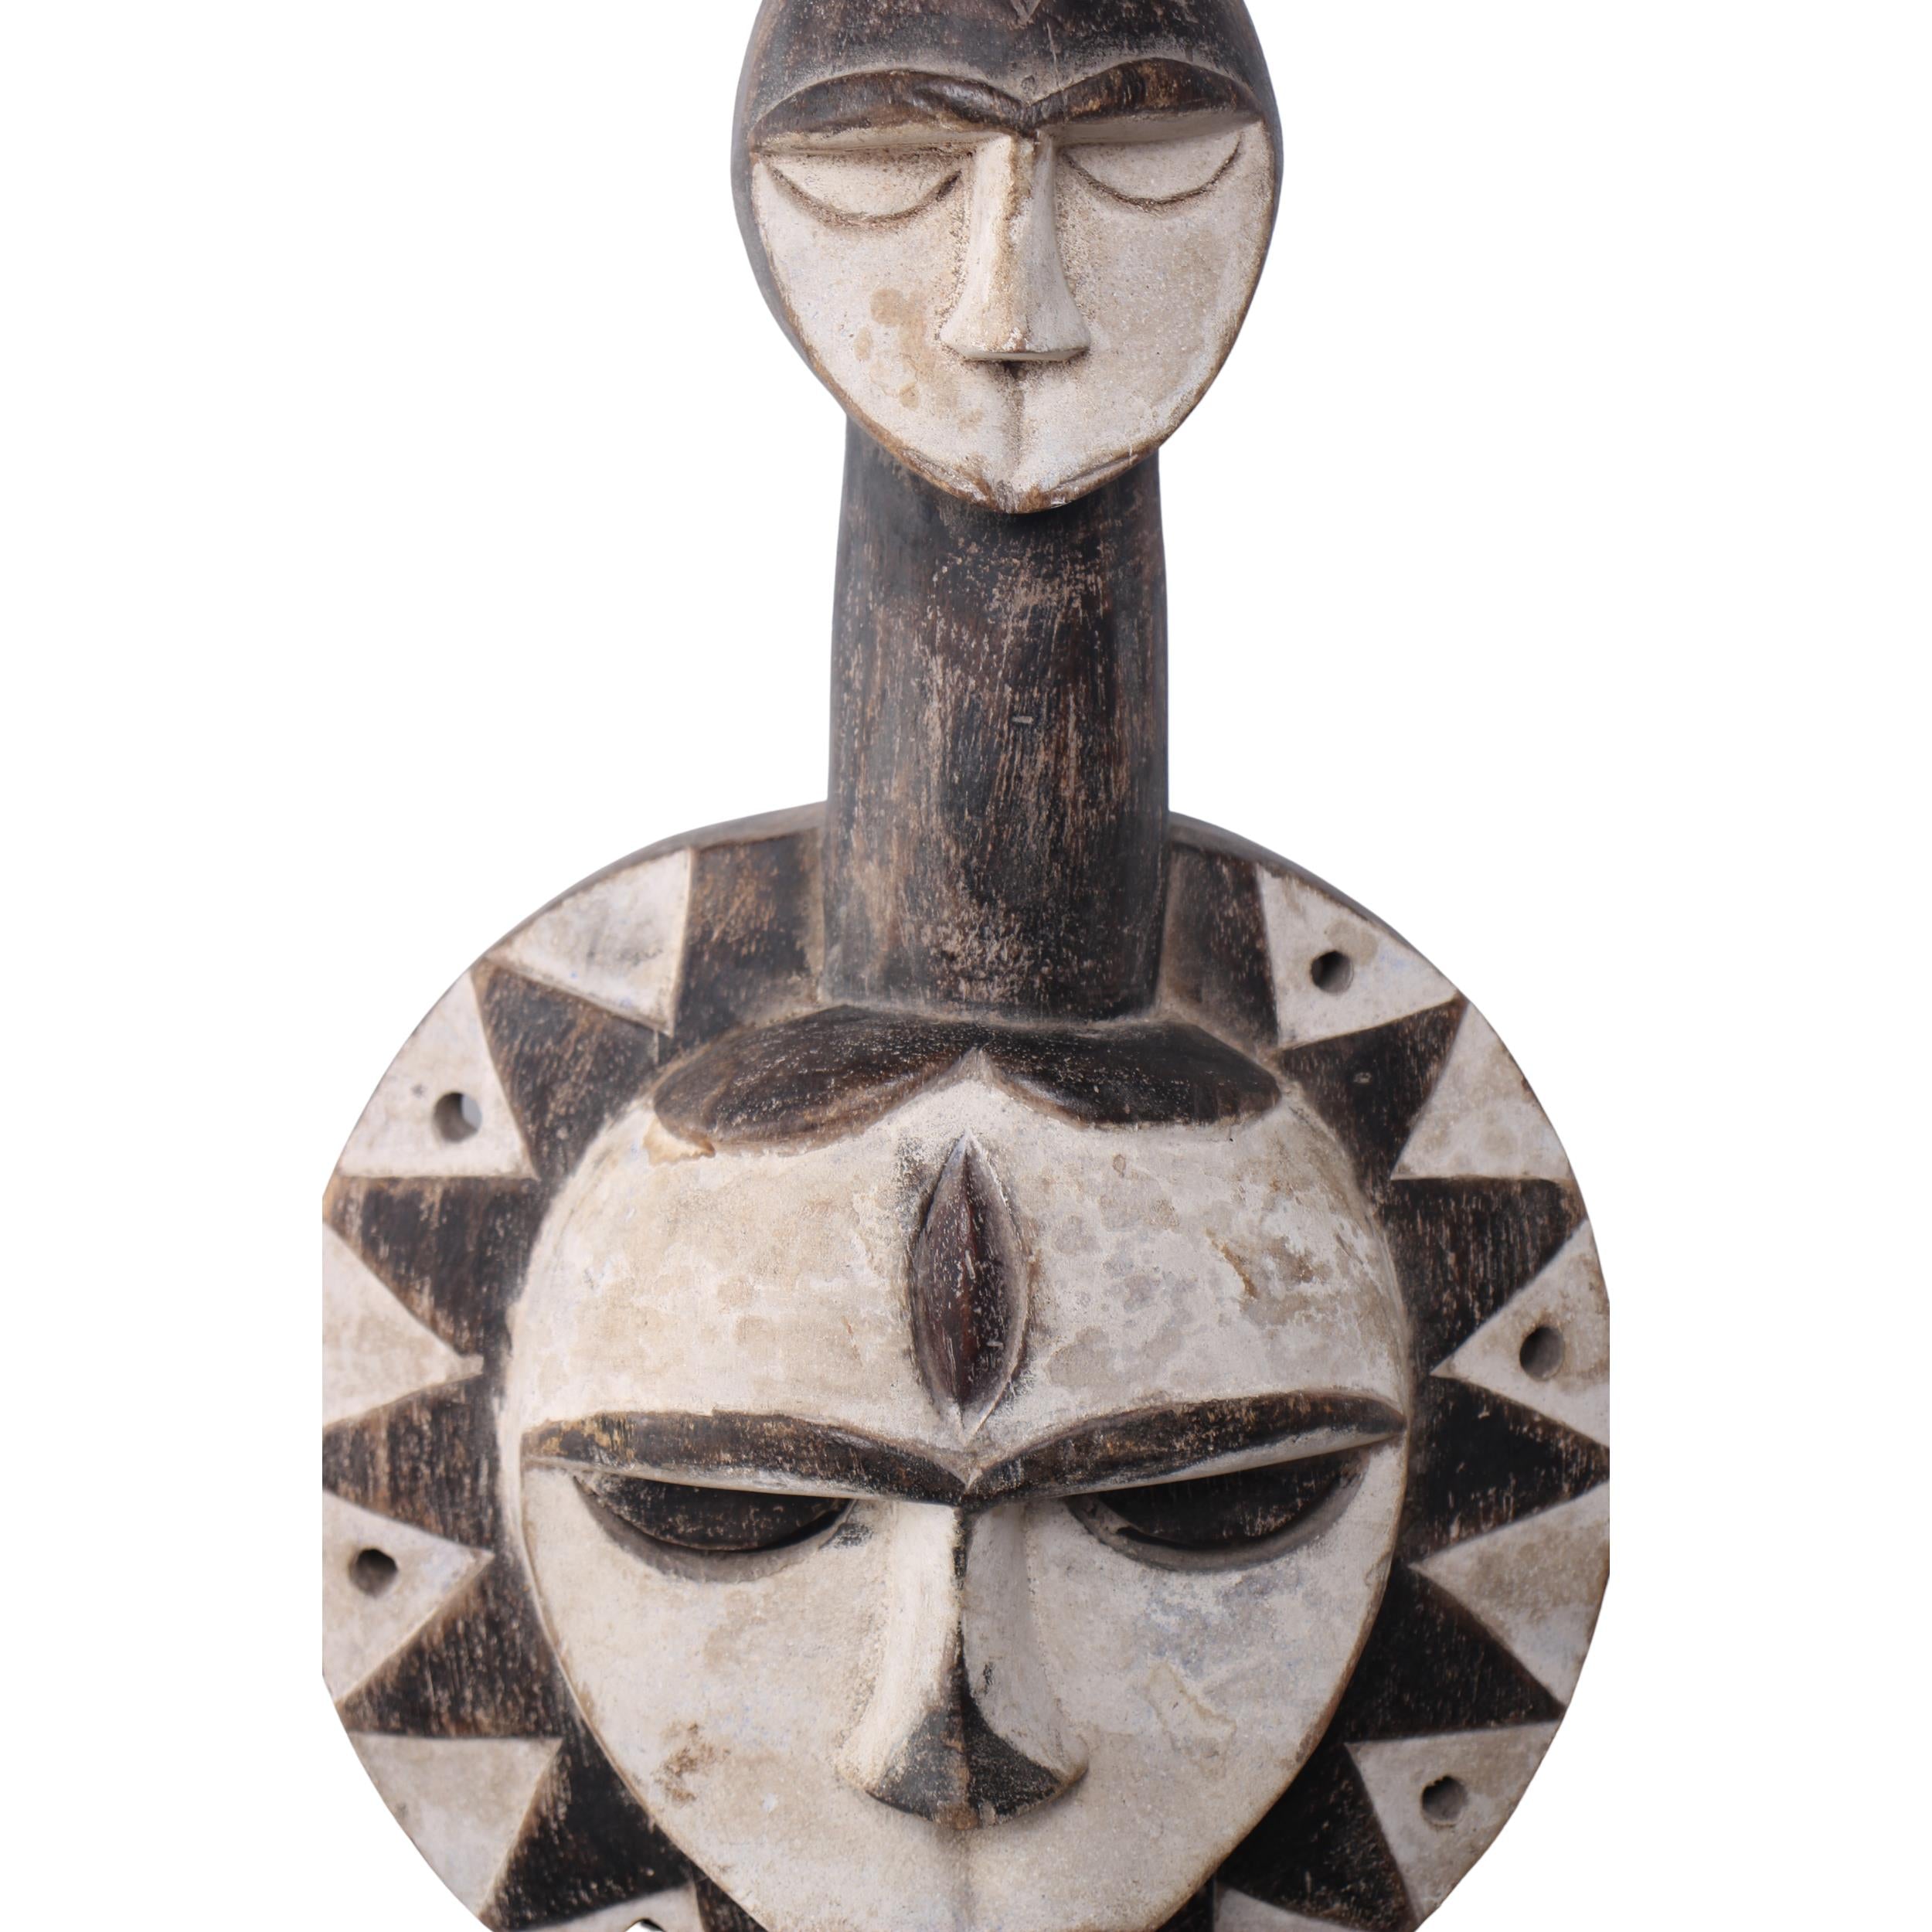 Eket Tribe Mask ~16.1" Tall - Mask